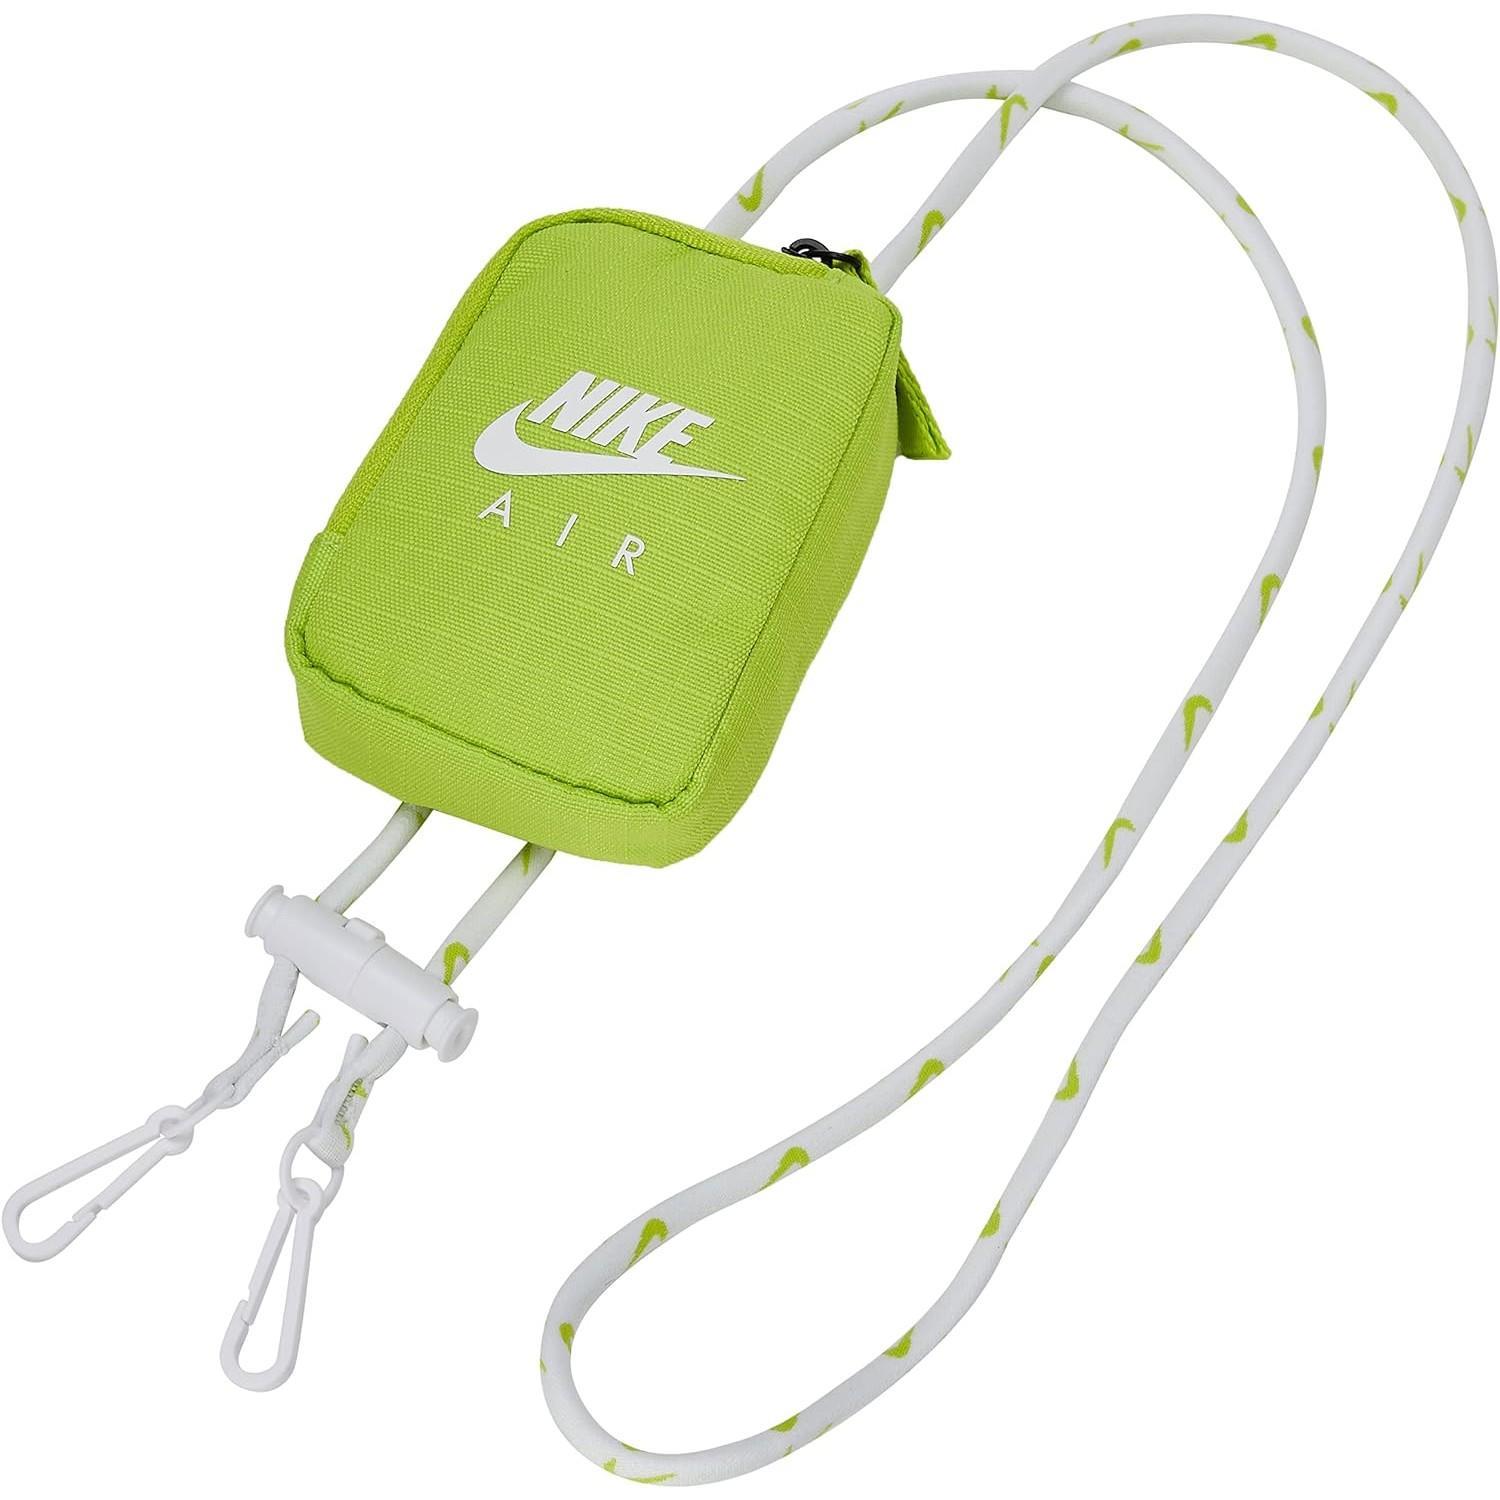 Nike Lanyard Pouch (Atomic Green/White) (One Size)